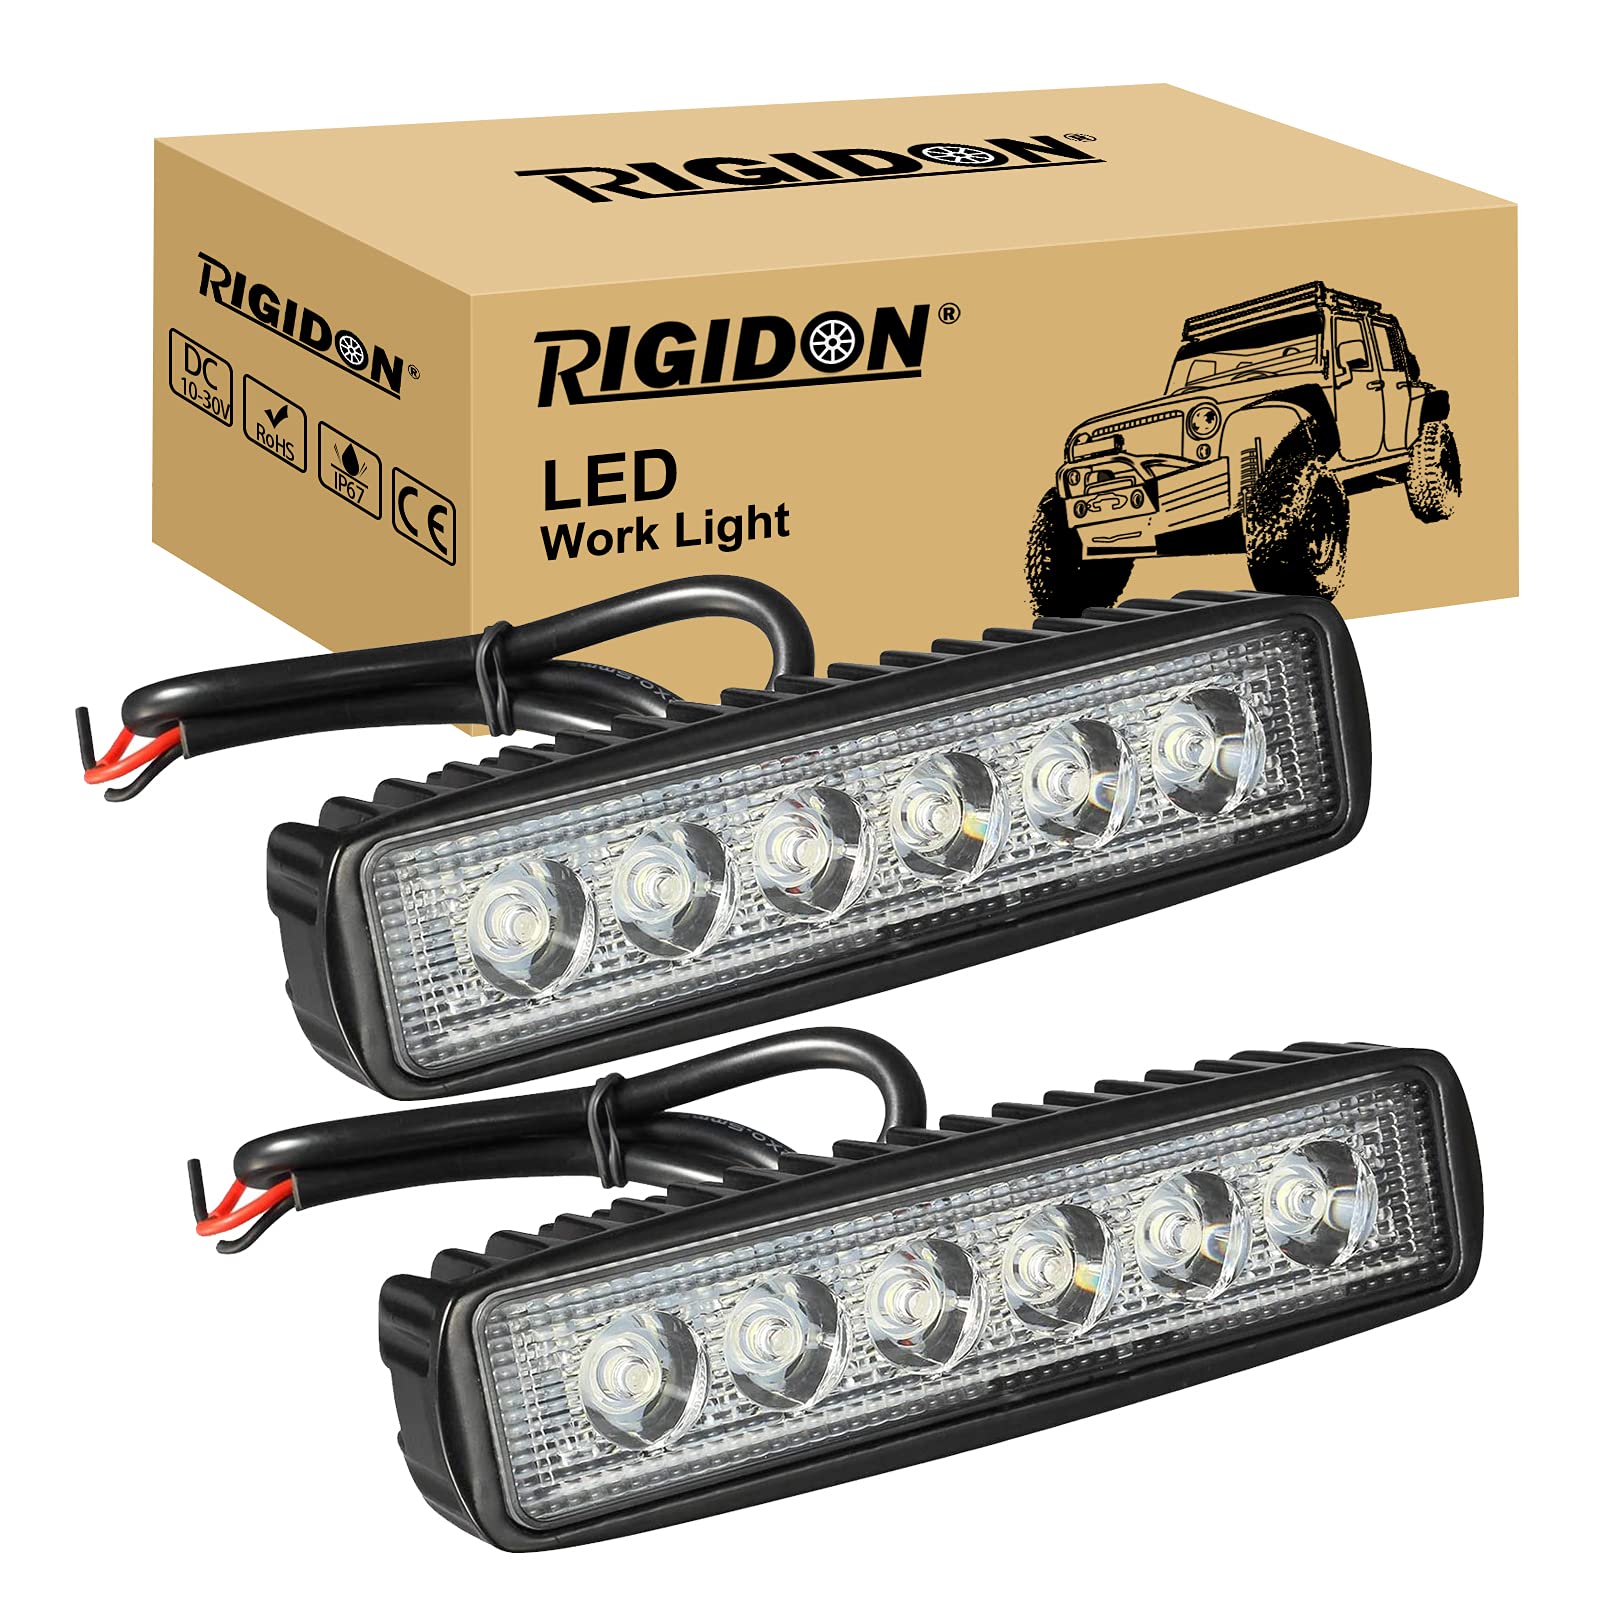 RIGIDON 2 Pcs Mini led lichtleiste, 18W 6 Zoll 15cm Spot Strahler offroad beleuchtung für Auto SUV ATV, Traktor, LKW, 4x4, 6000K Weiß led nebelscheinwerfer, led arbeitsscheinwerfer, led arbeitslicht von RIGIDON